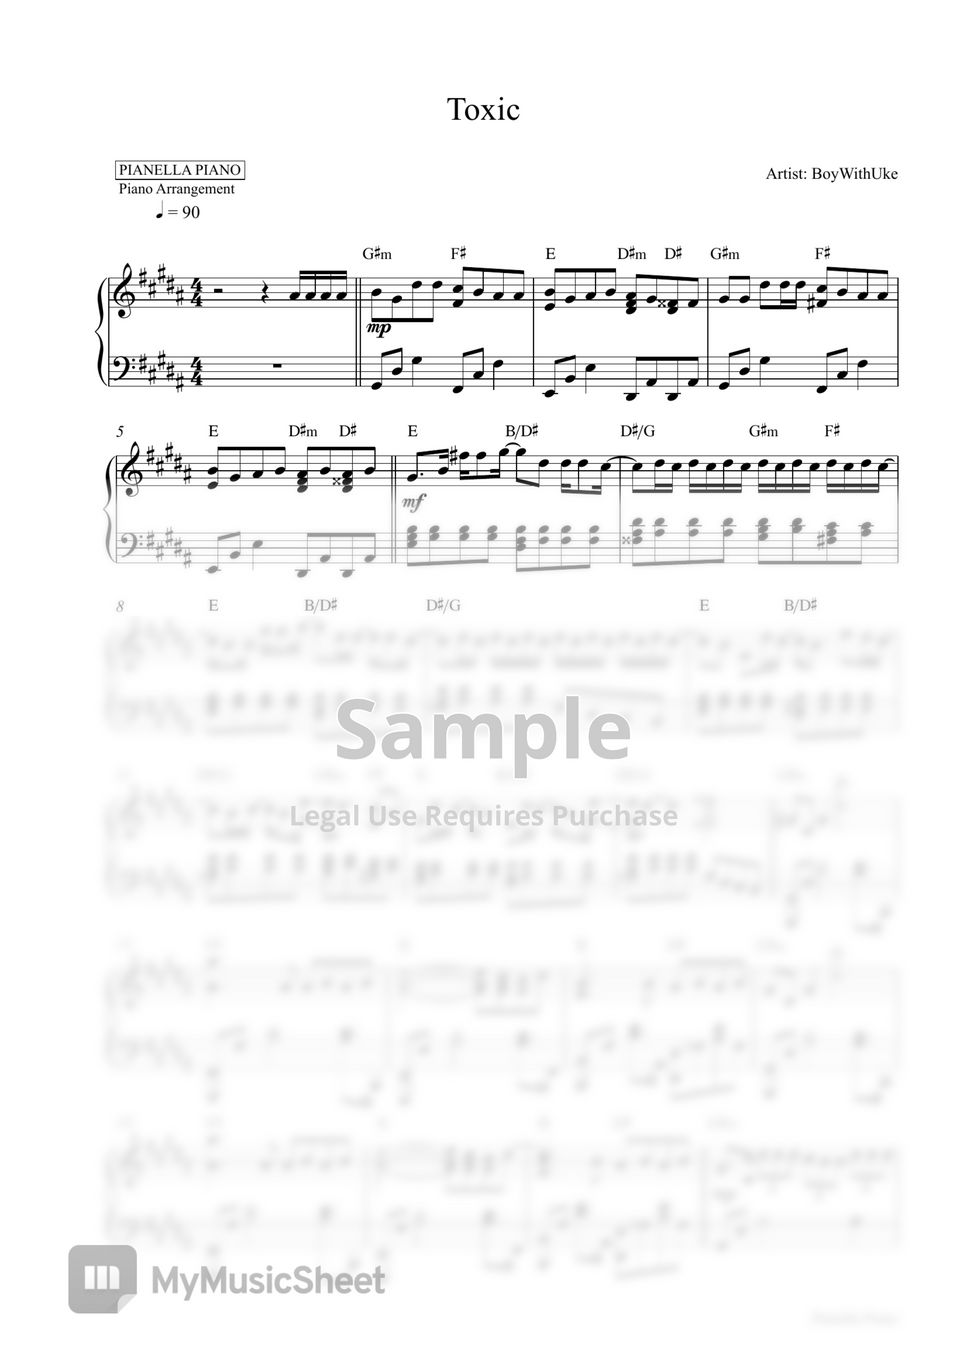 BoyWithUke - Toxic (Piano Sheet) Partitura by Pianella Piano